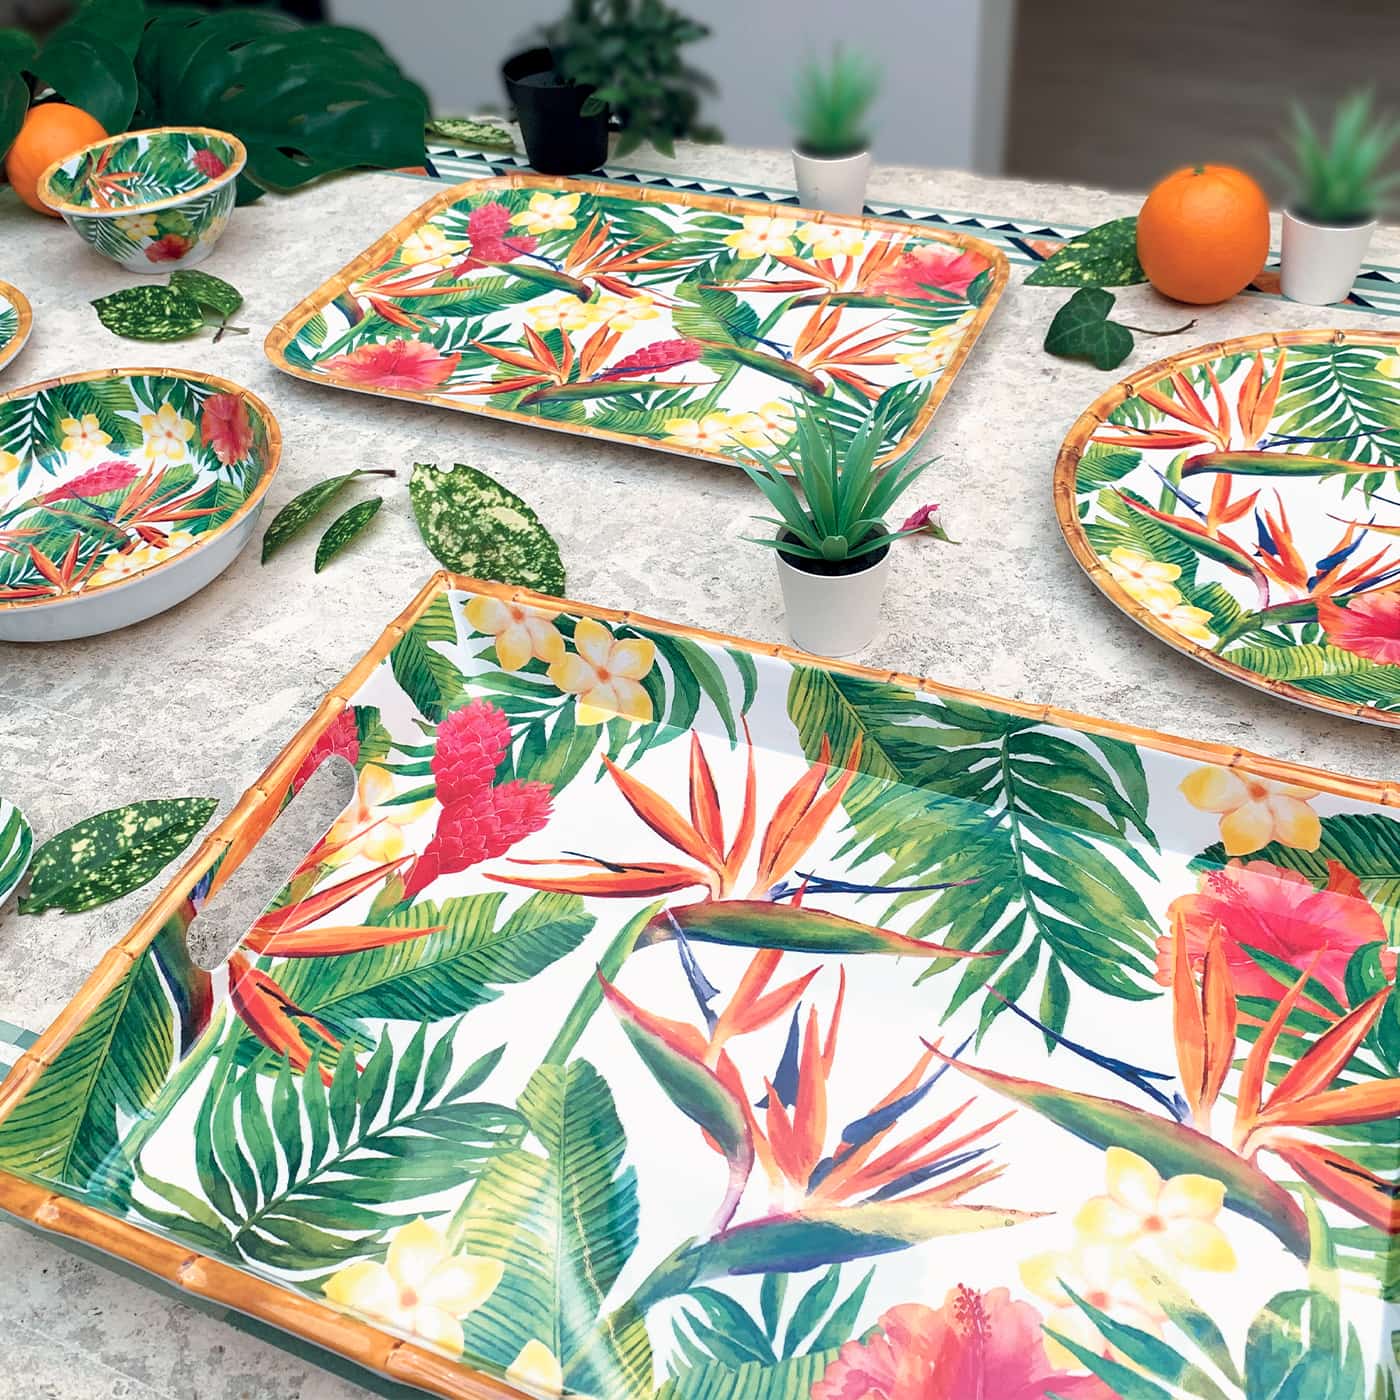 Large melamine tray with handles - flower design - 50 x 36 x 5 cm